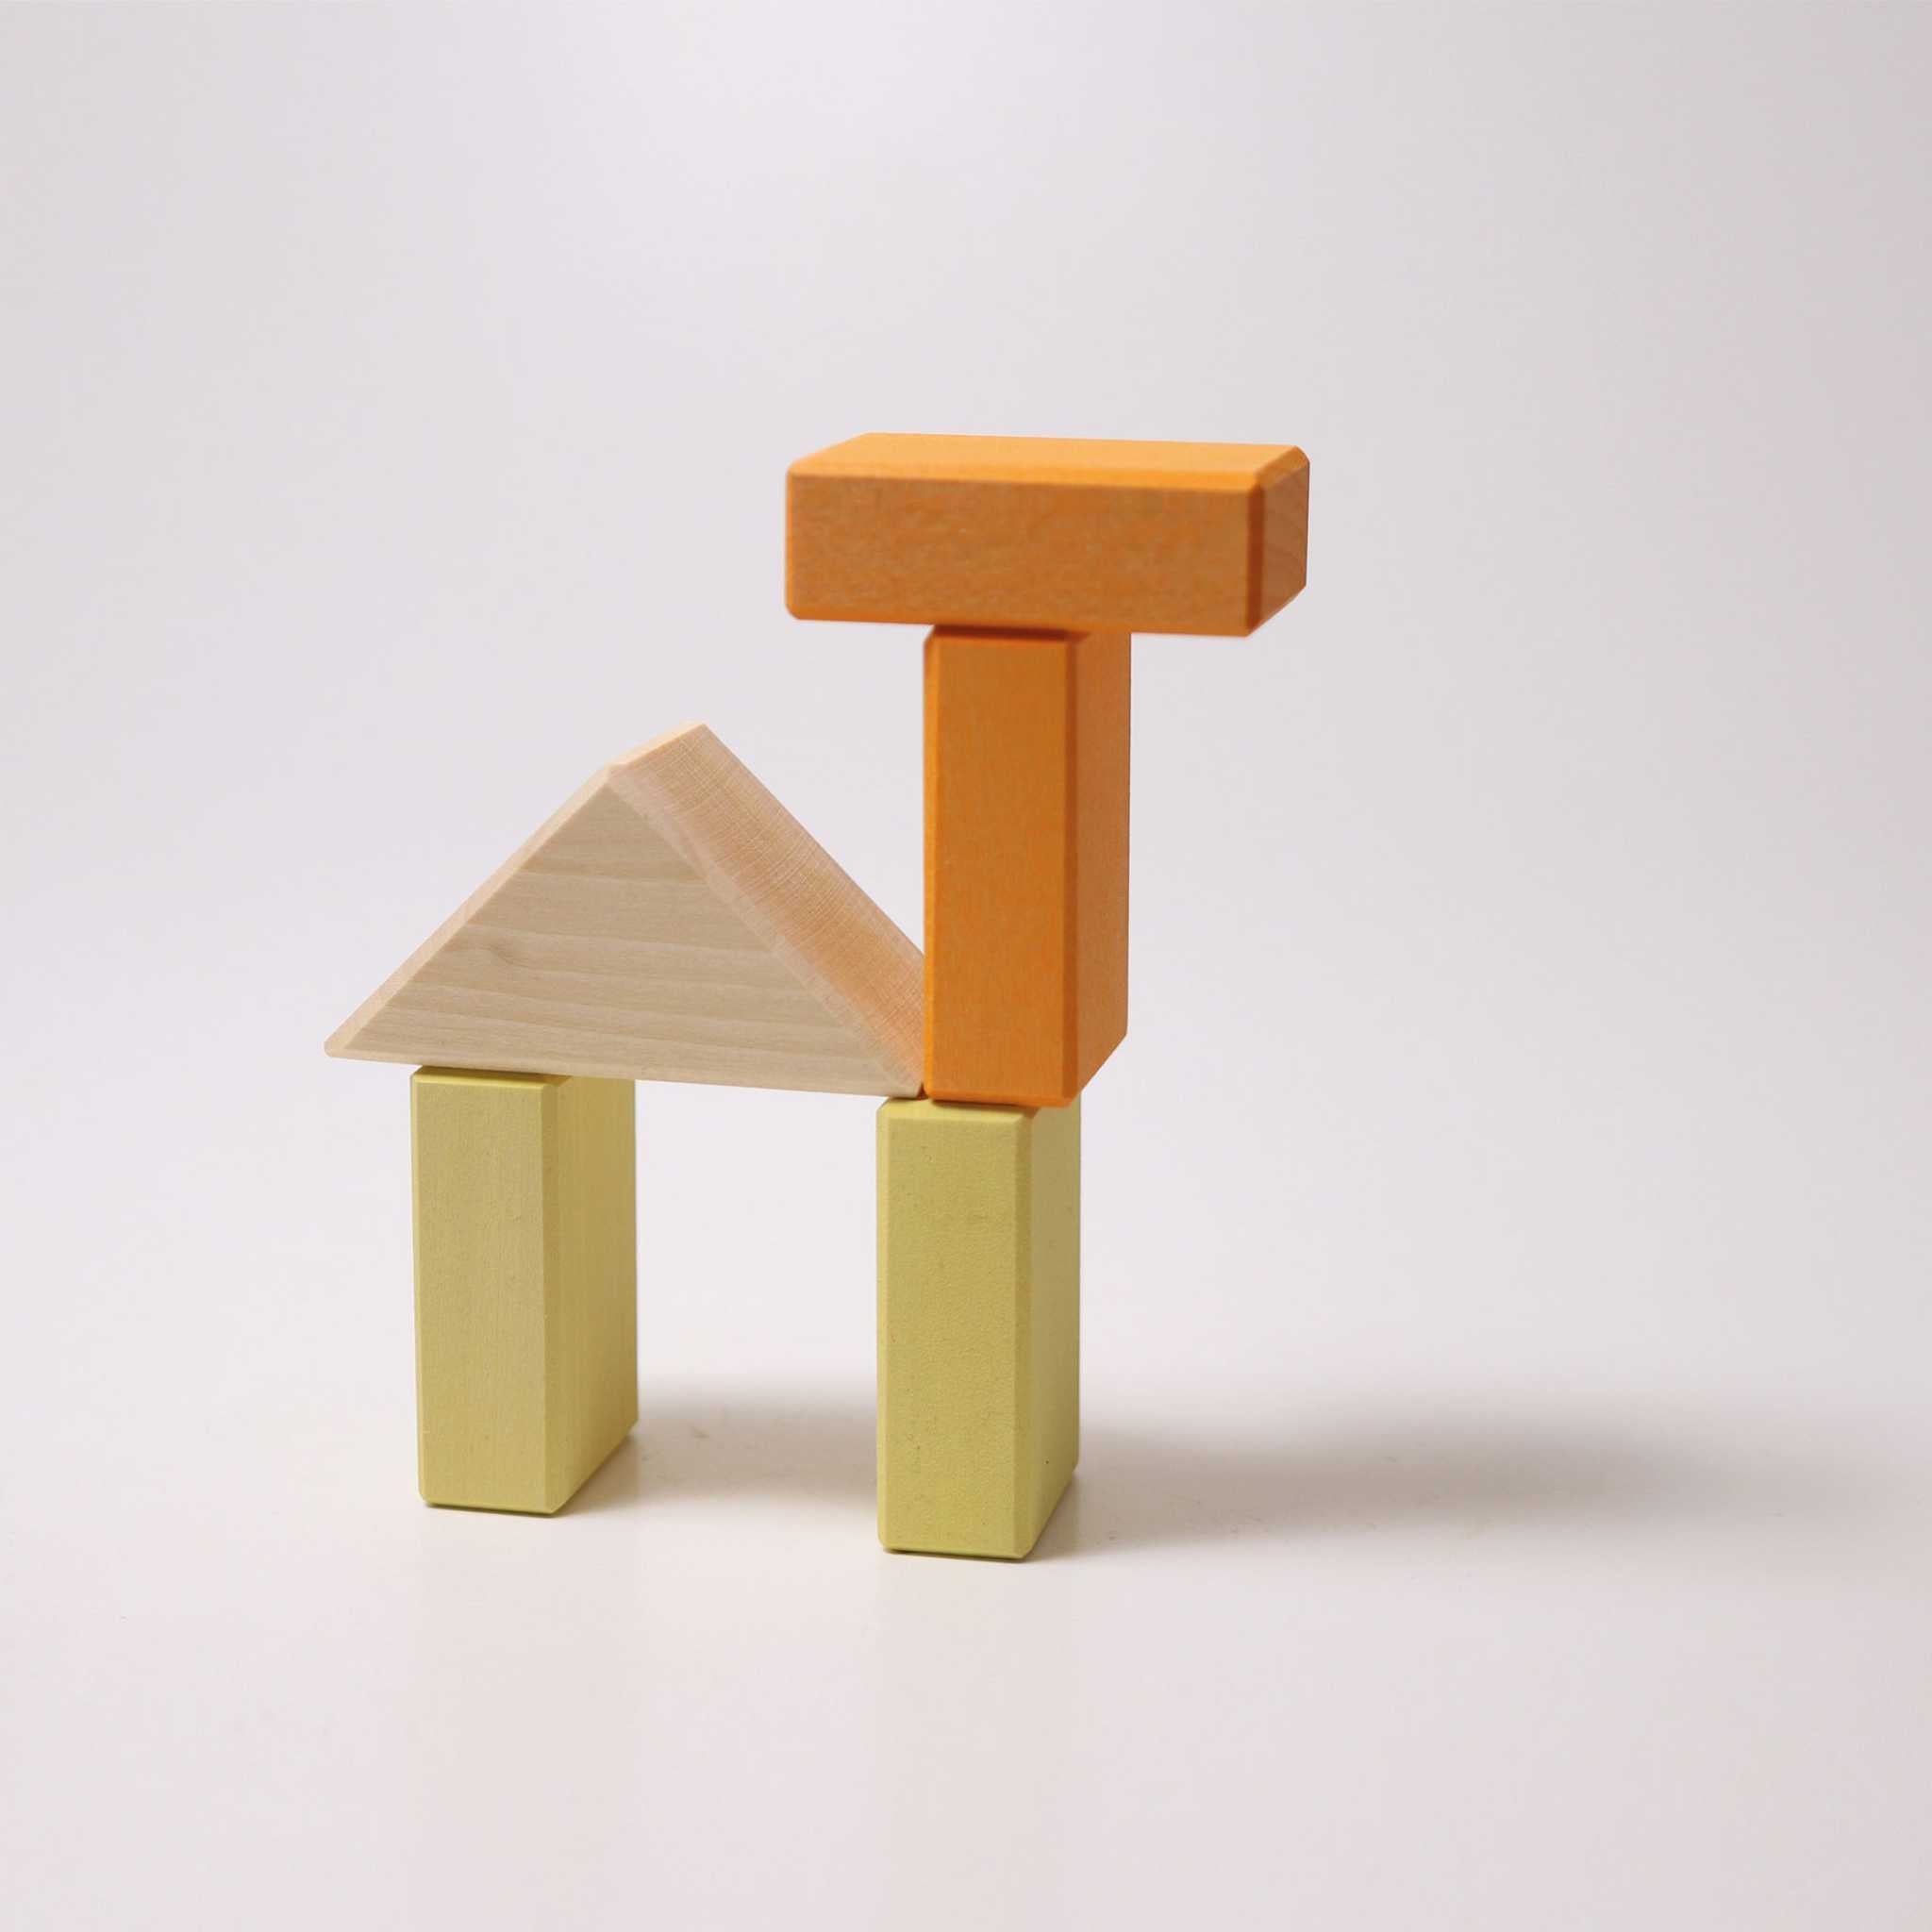  Grimm's Pastel Duo Building Blocks - Animal Shape